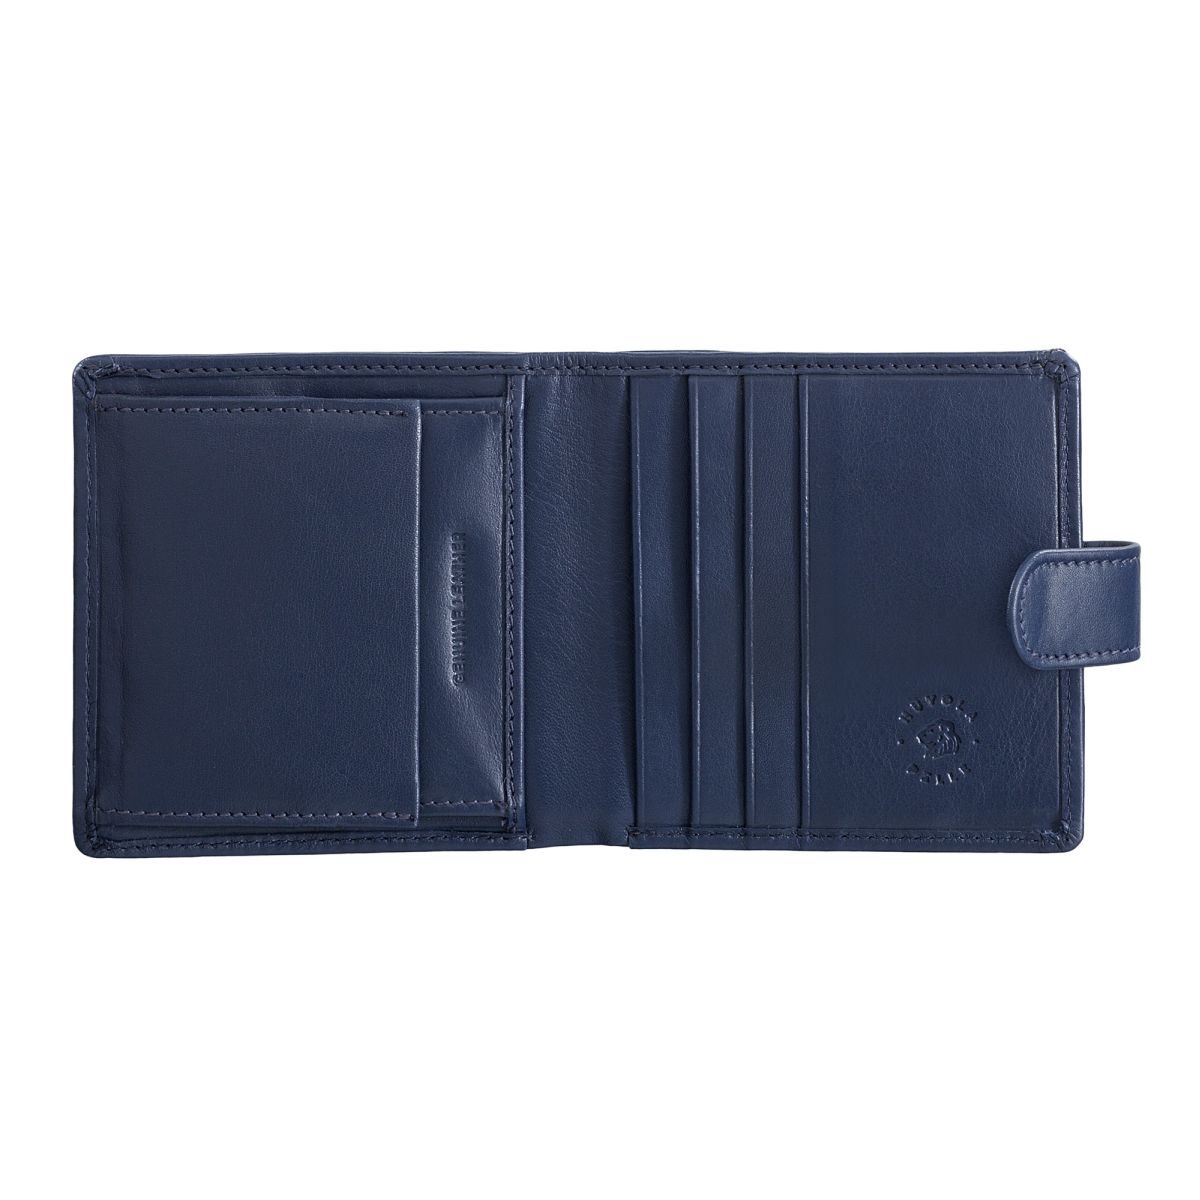 Buy Spiffy Slim Leather Wallet for Men | Men Wallet | Men's Styilish Wallet  at Amazon.in